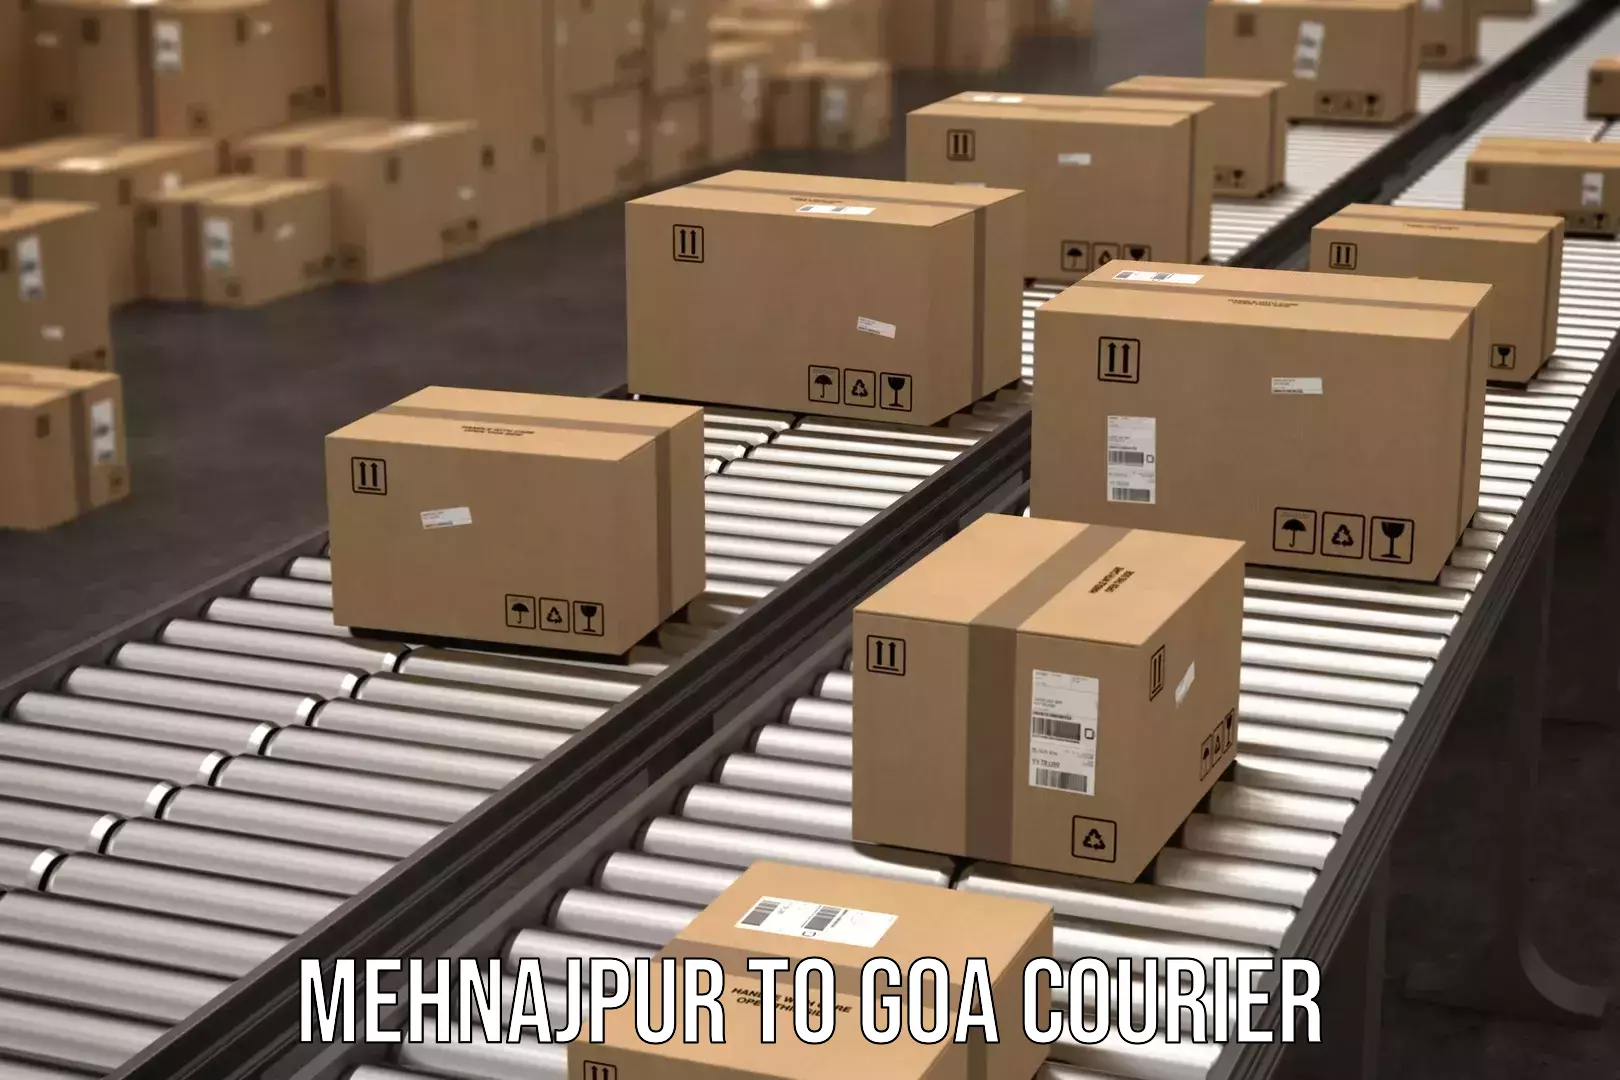 Courier service comparison Mehnajpur to Goa